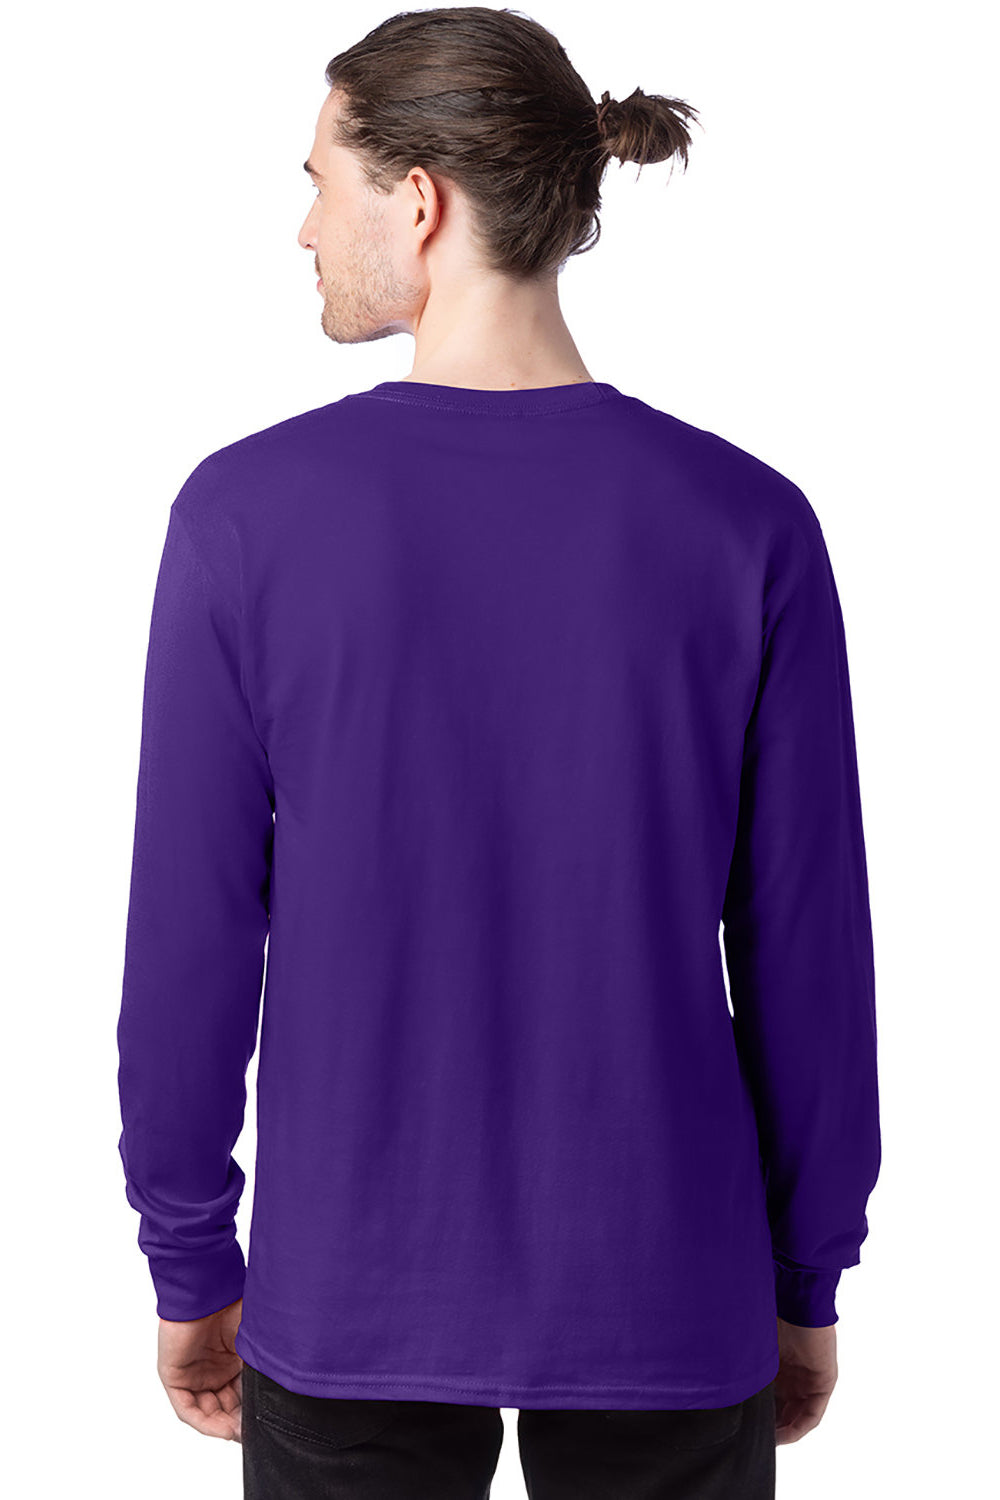 Hanes 5286 Mens ComfortSoft Long Sleeve Crewneck T-Shirt Athletic Purple Back